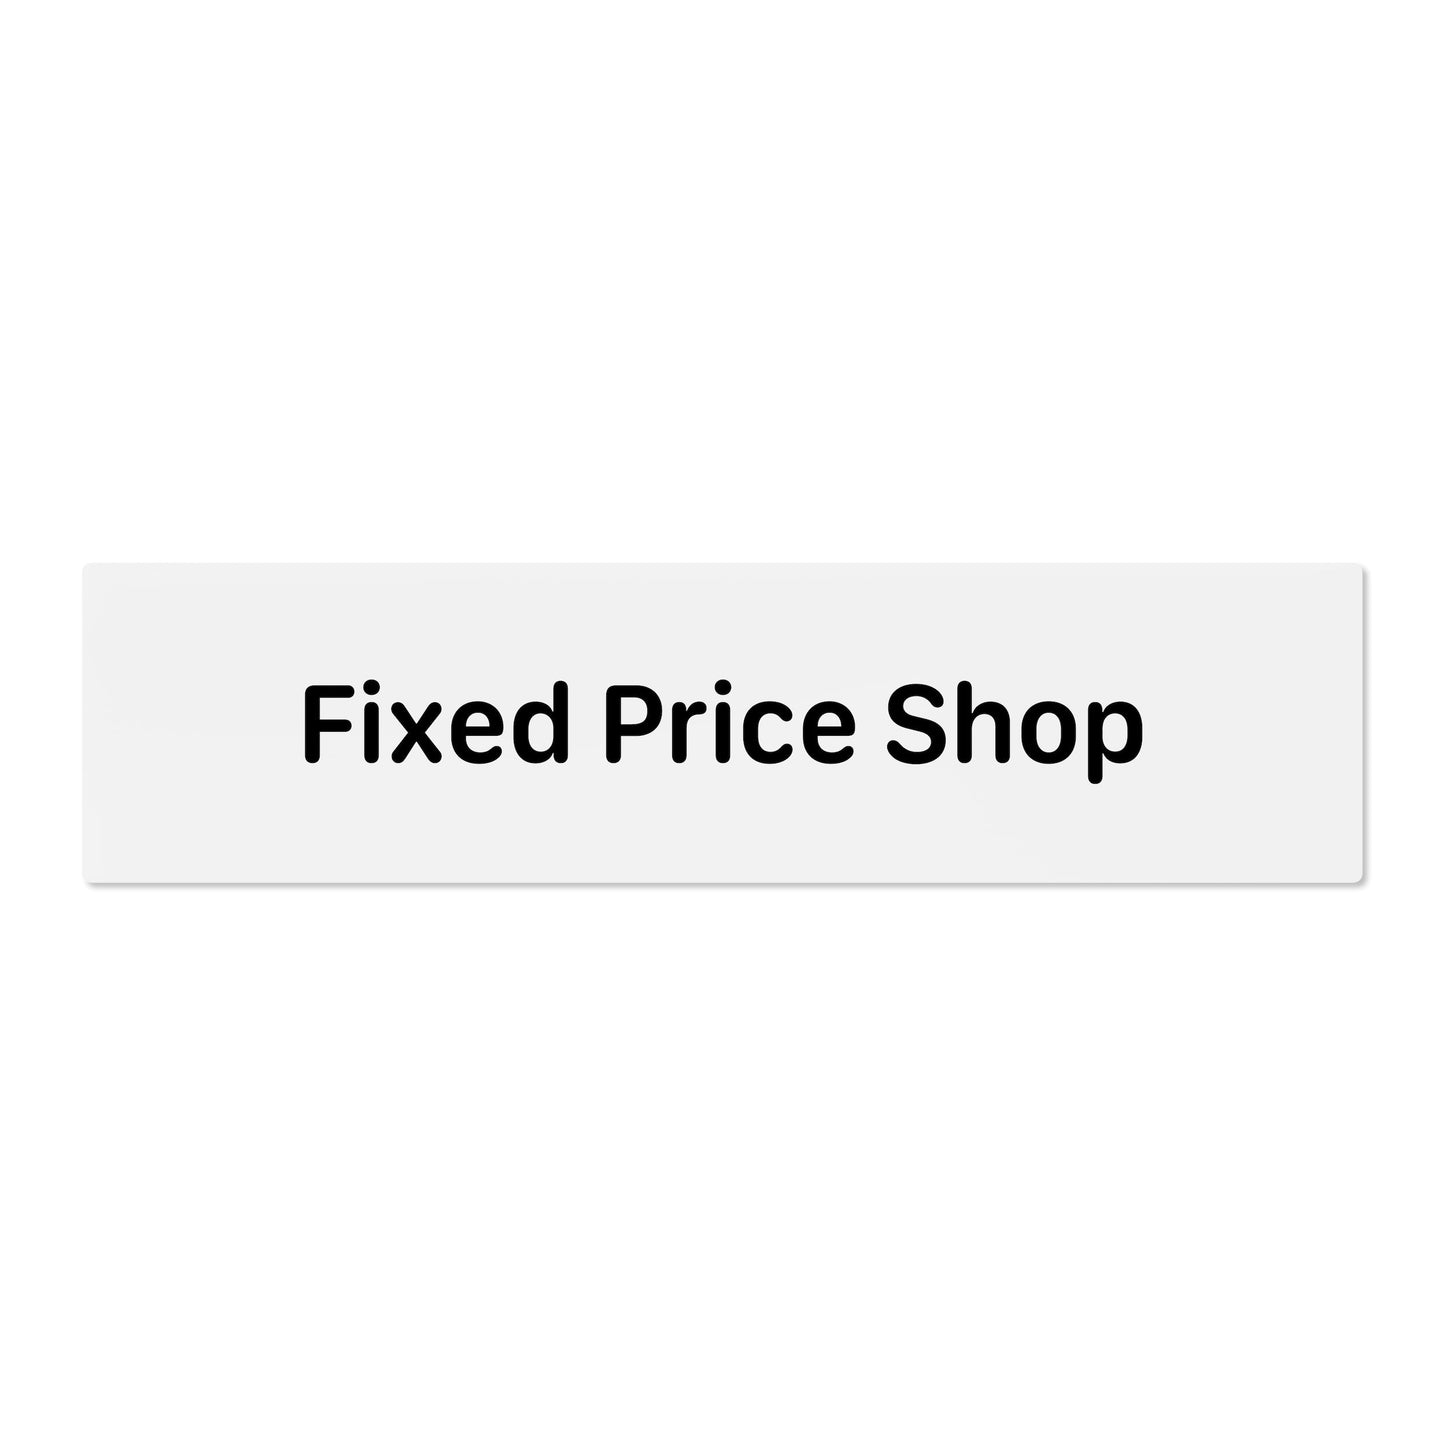 Fixed Price Shop